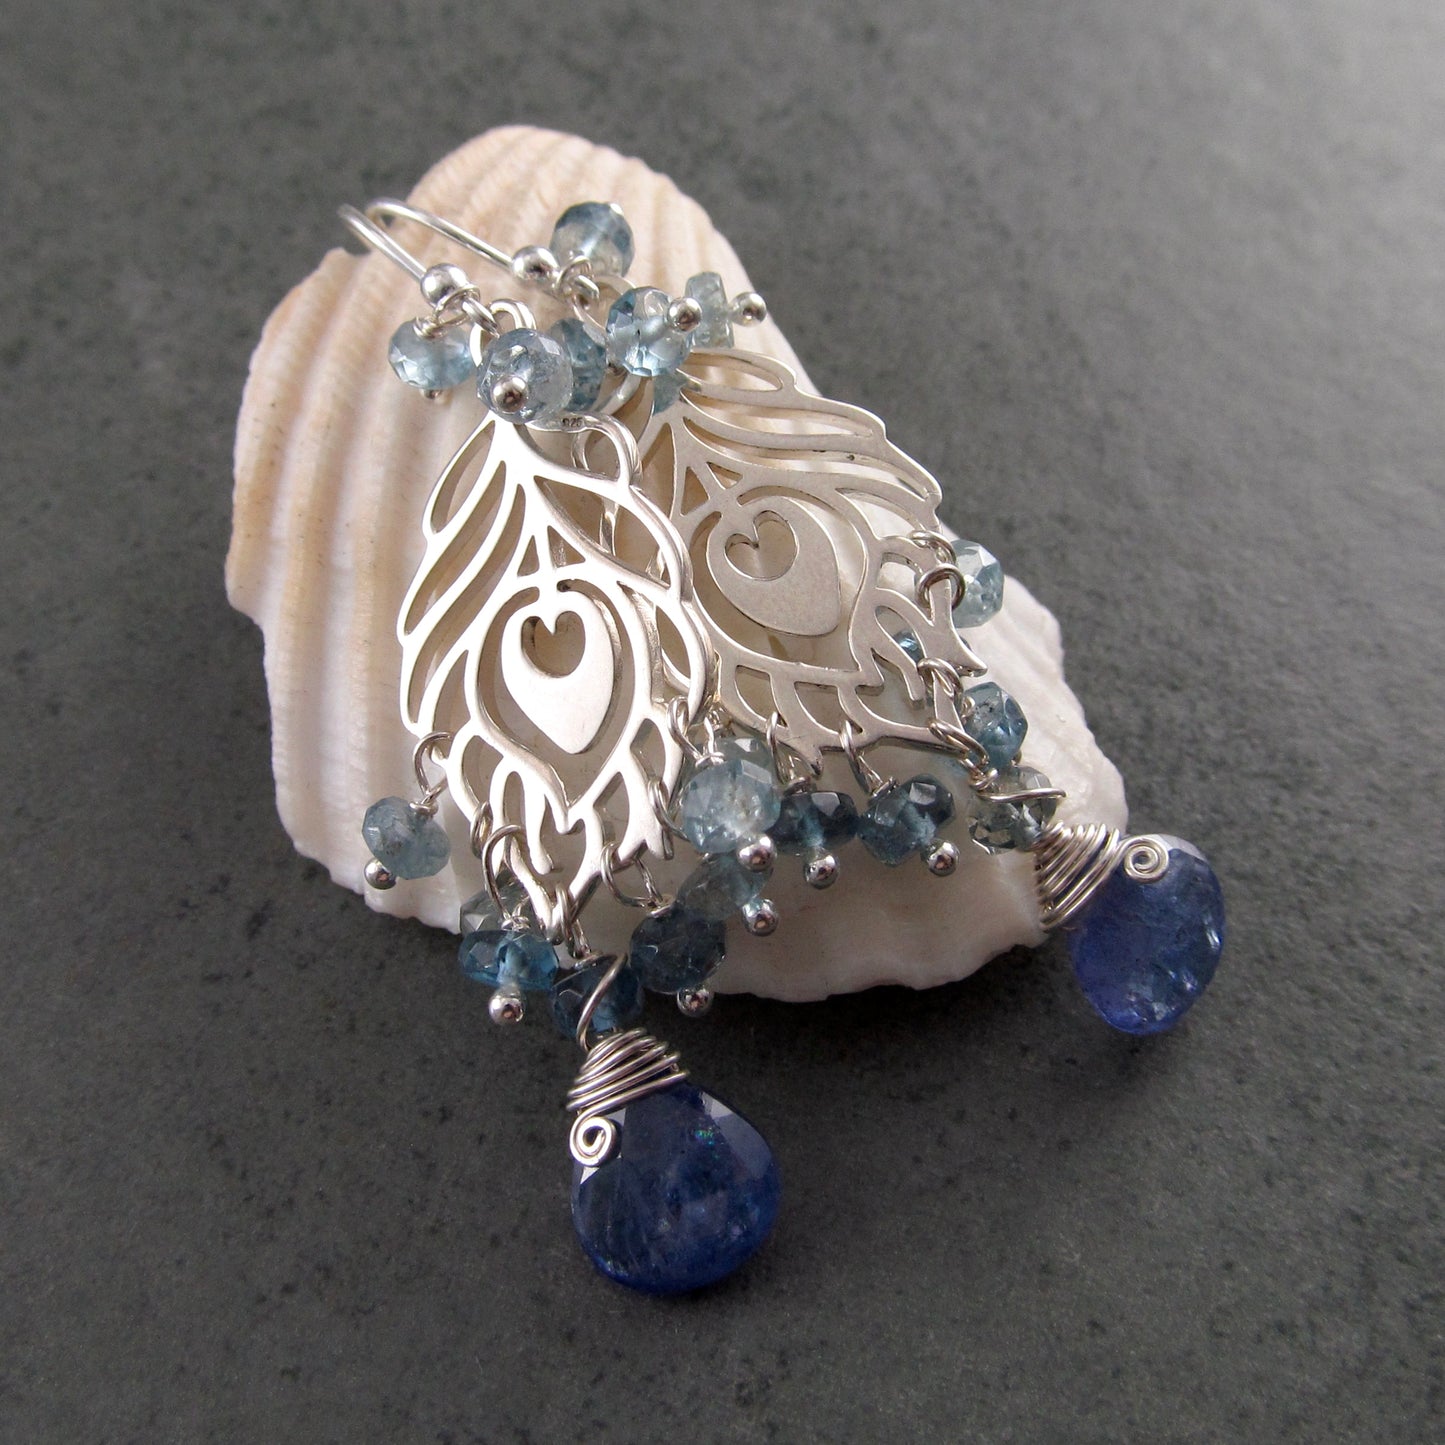 Peacock feather earrings, handmade sterling silver aquamarine and tanzanite chandelier earrings-OOAK